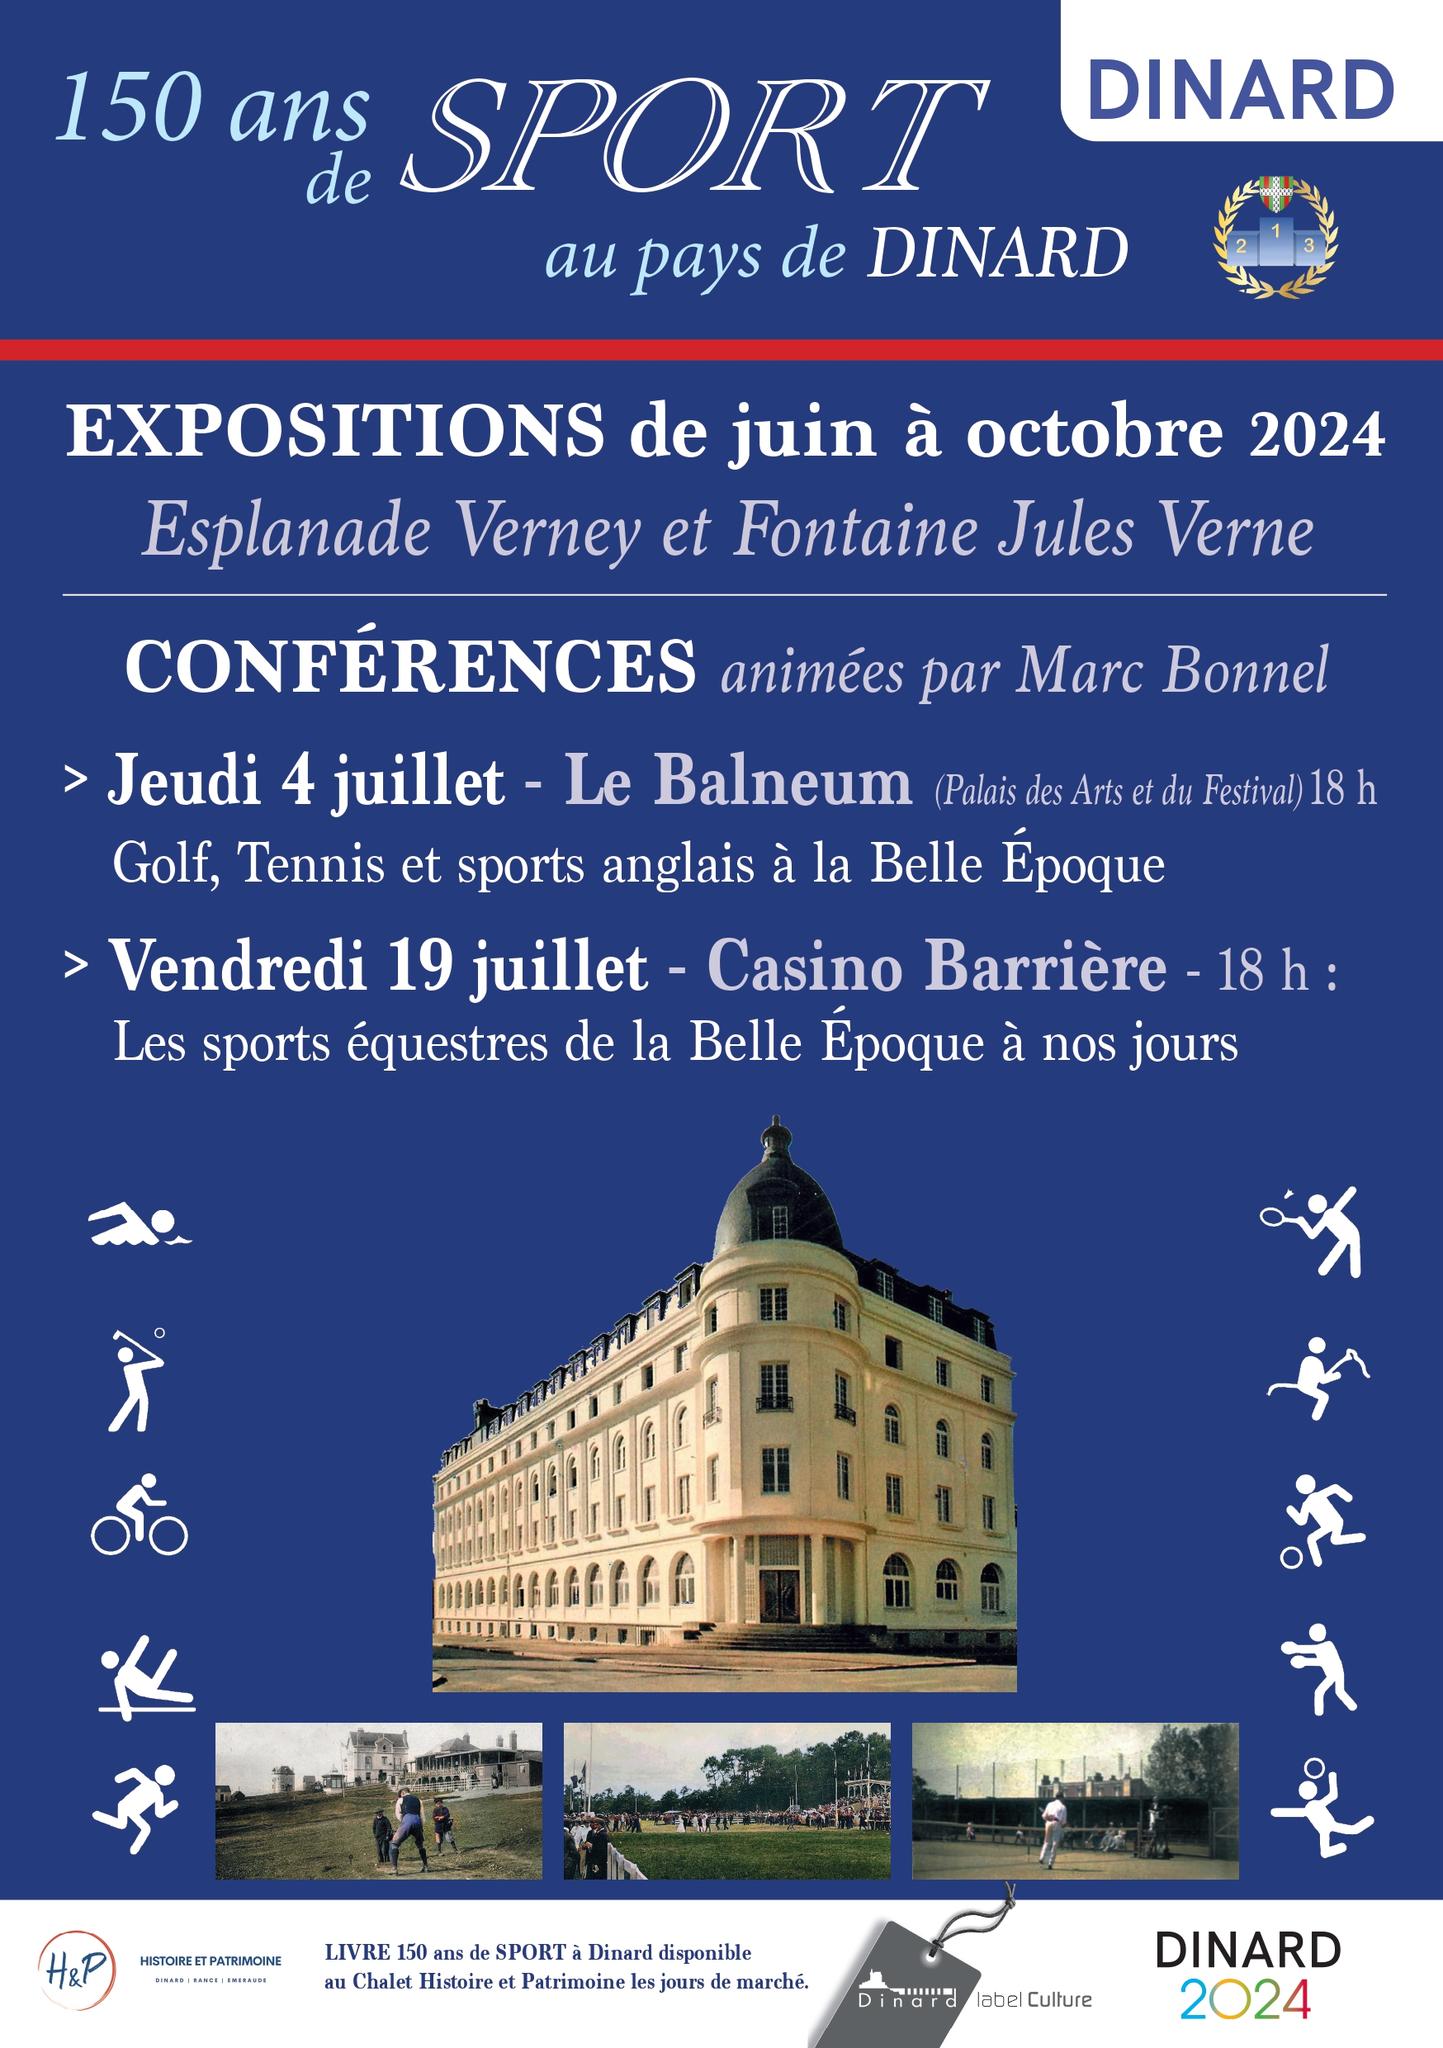 Histoire & Patrimoine Dinard - Conférence